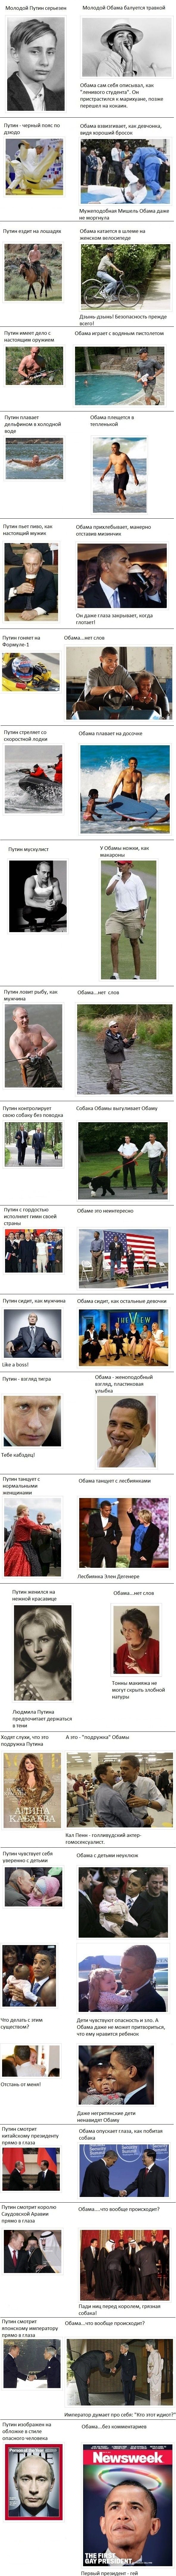 Юмор - Страница 3 Putin-vs-obama-002